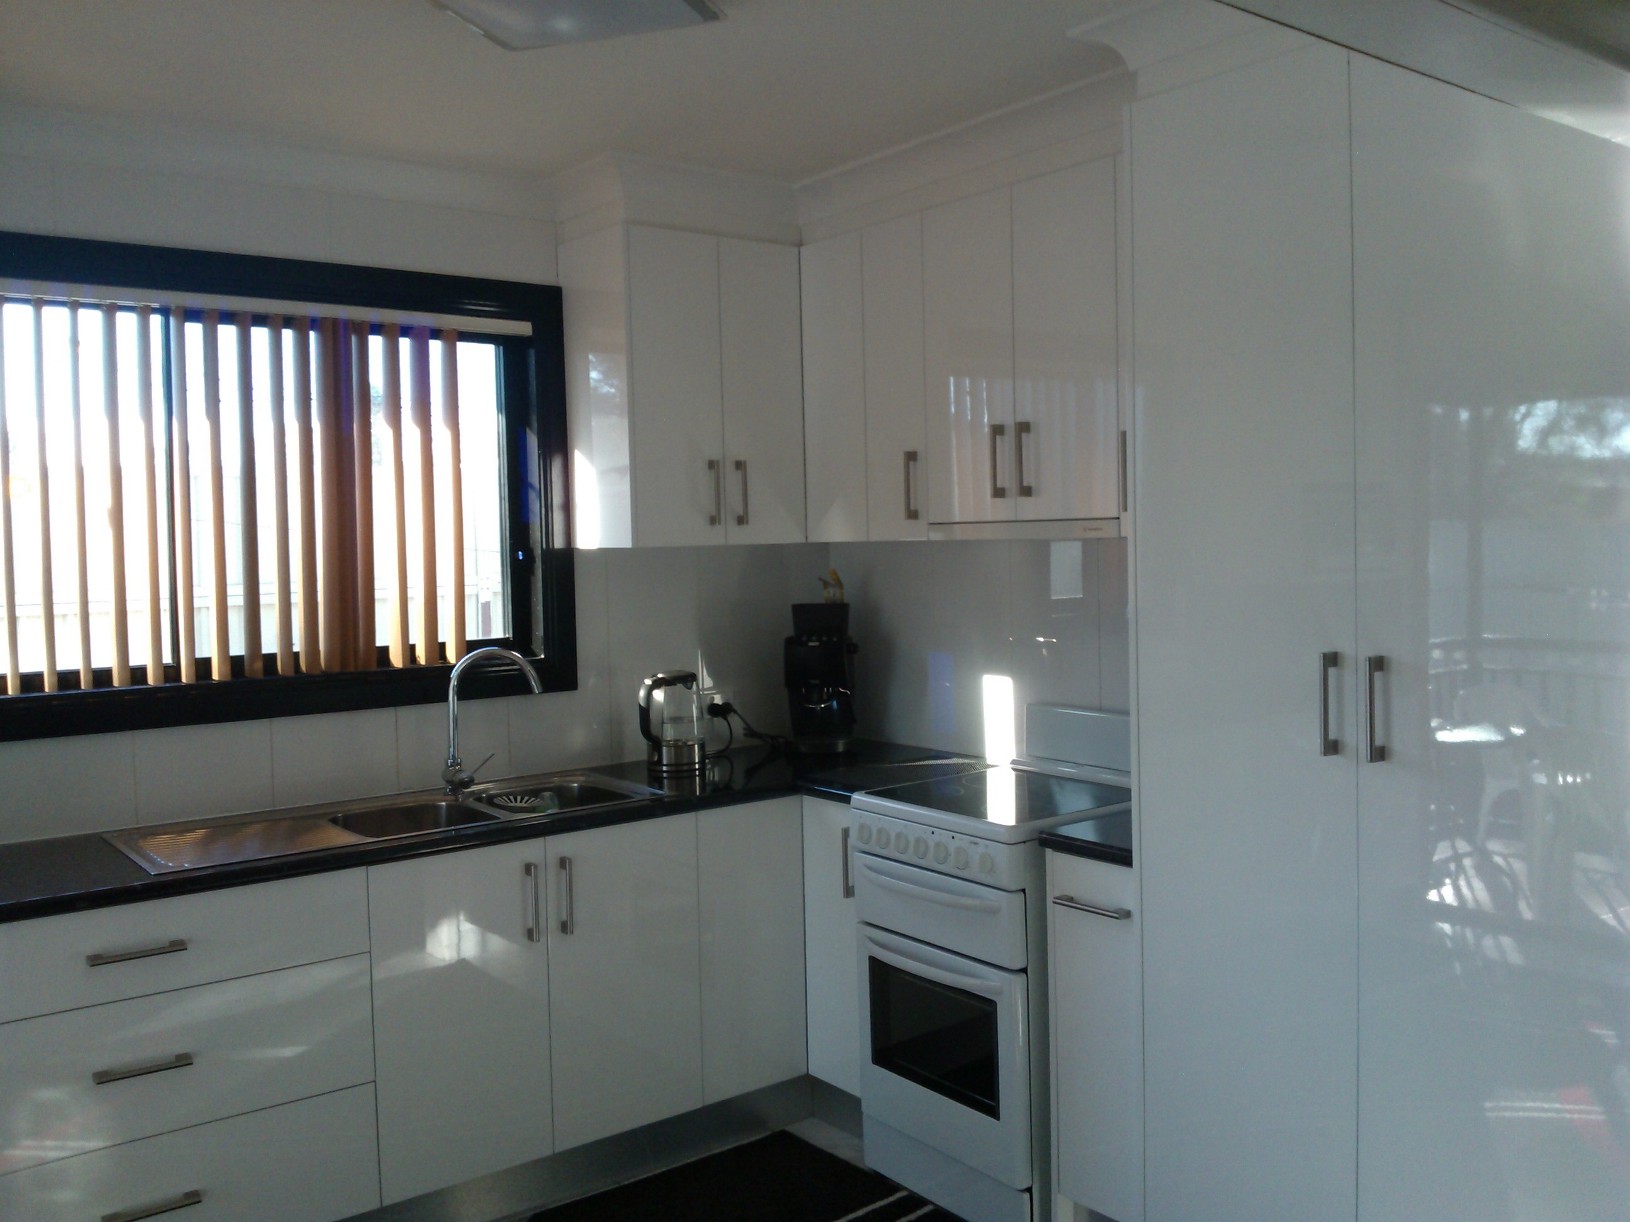 Granny flat kitchen renovation in Lurnea NSW